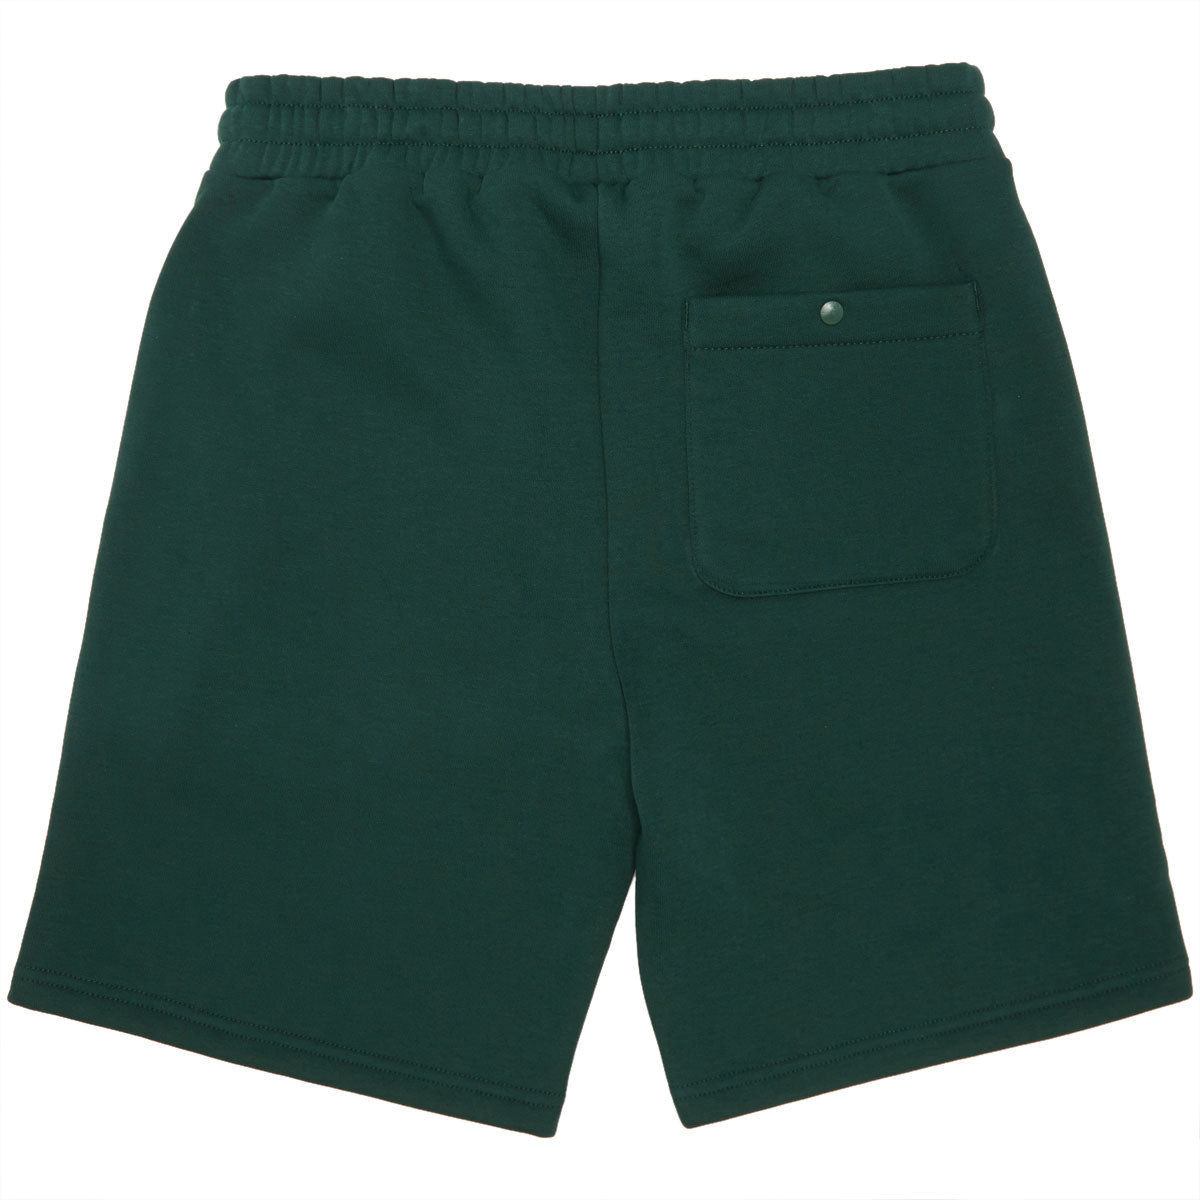 DGK Wonderland Fleece Shorts - Green image 2